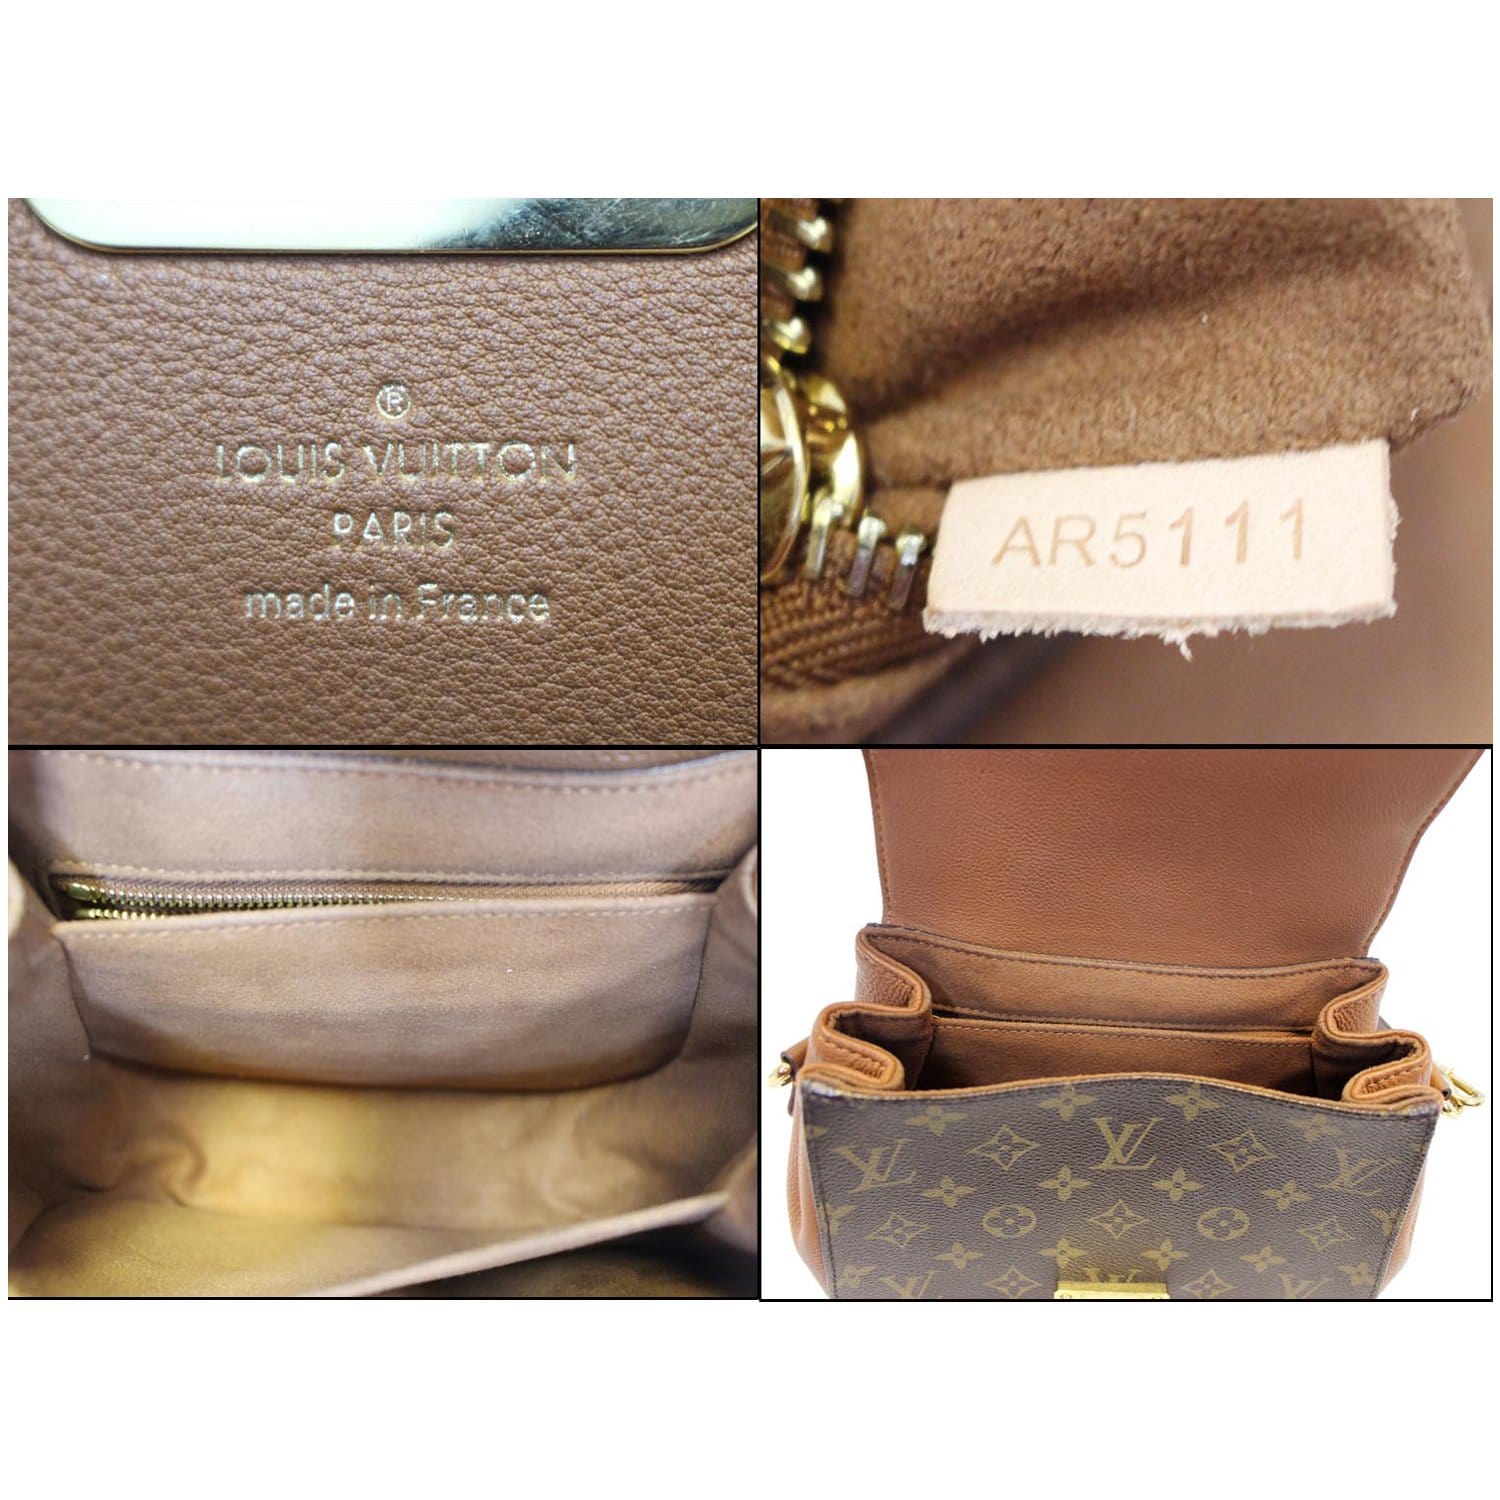 Eden leather handbag Louis Vuitton Brown in Leather - 17643588